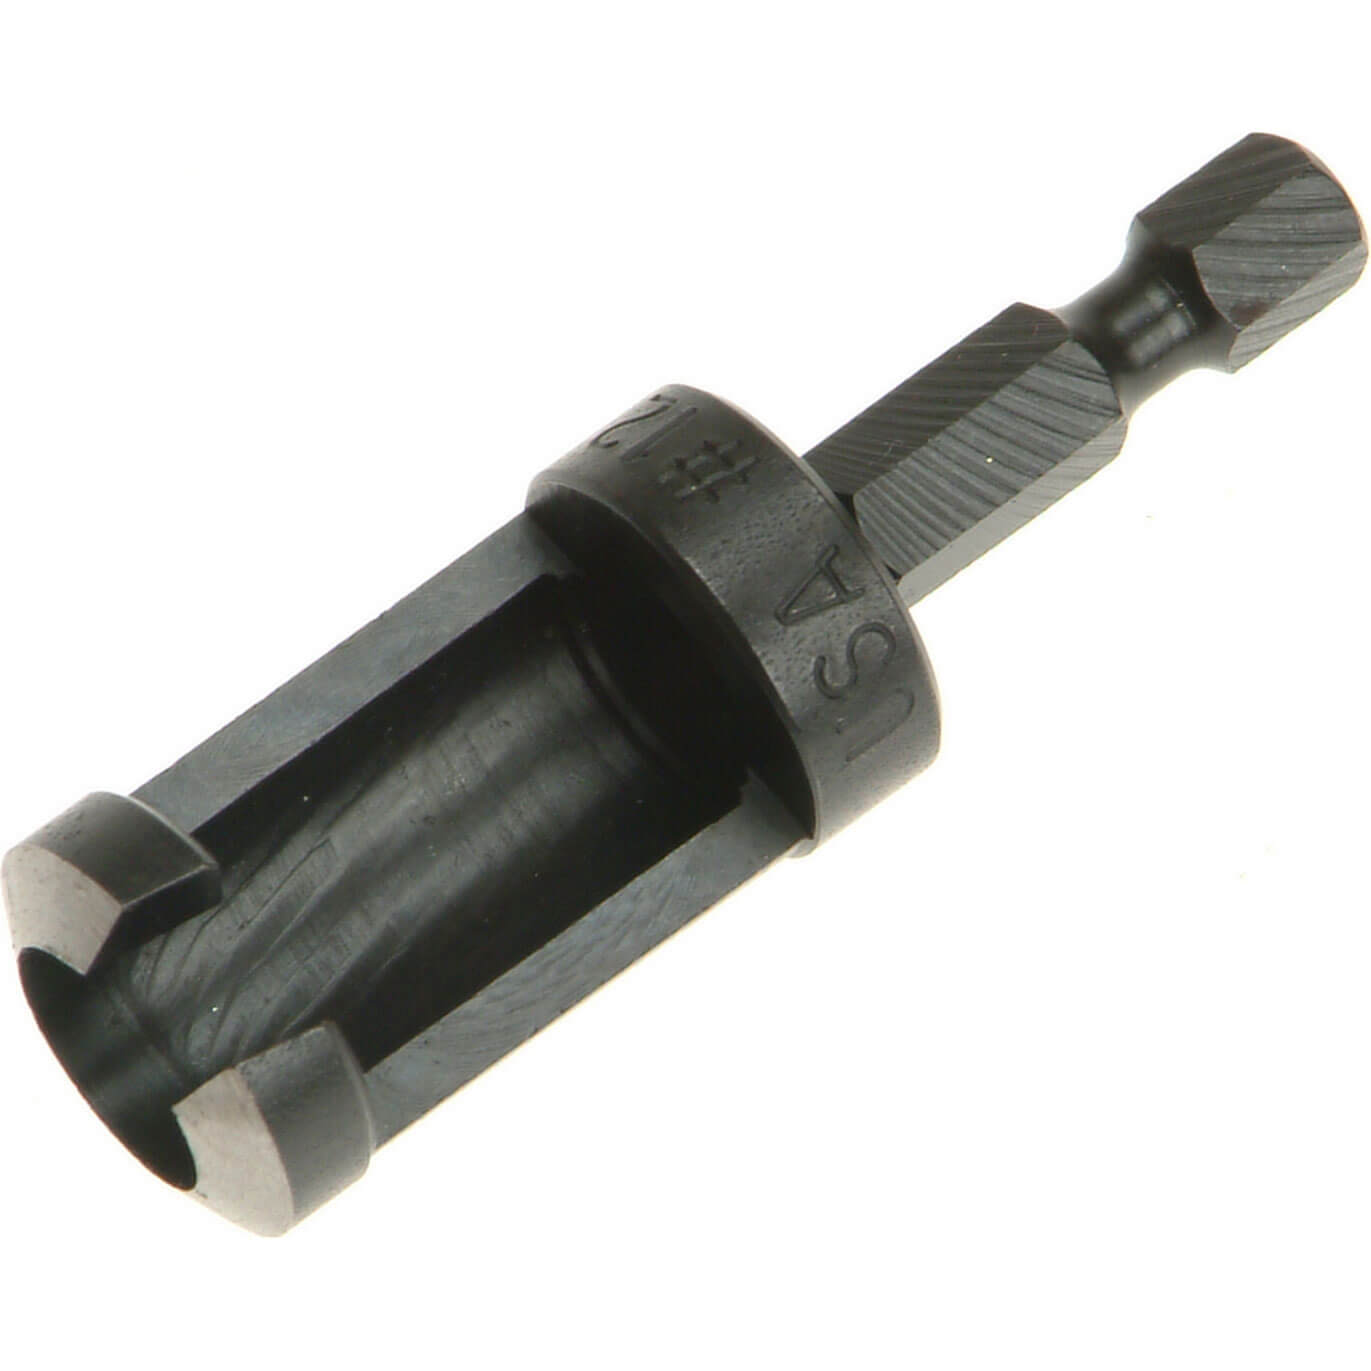 Disston 5597 Plug Cutter Size 12